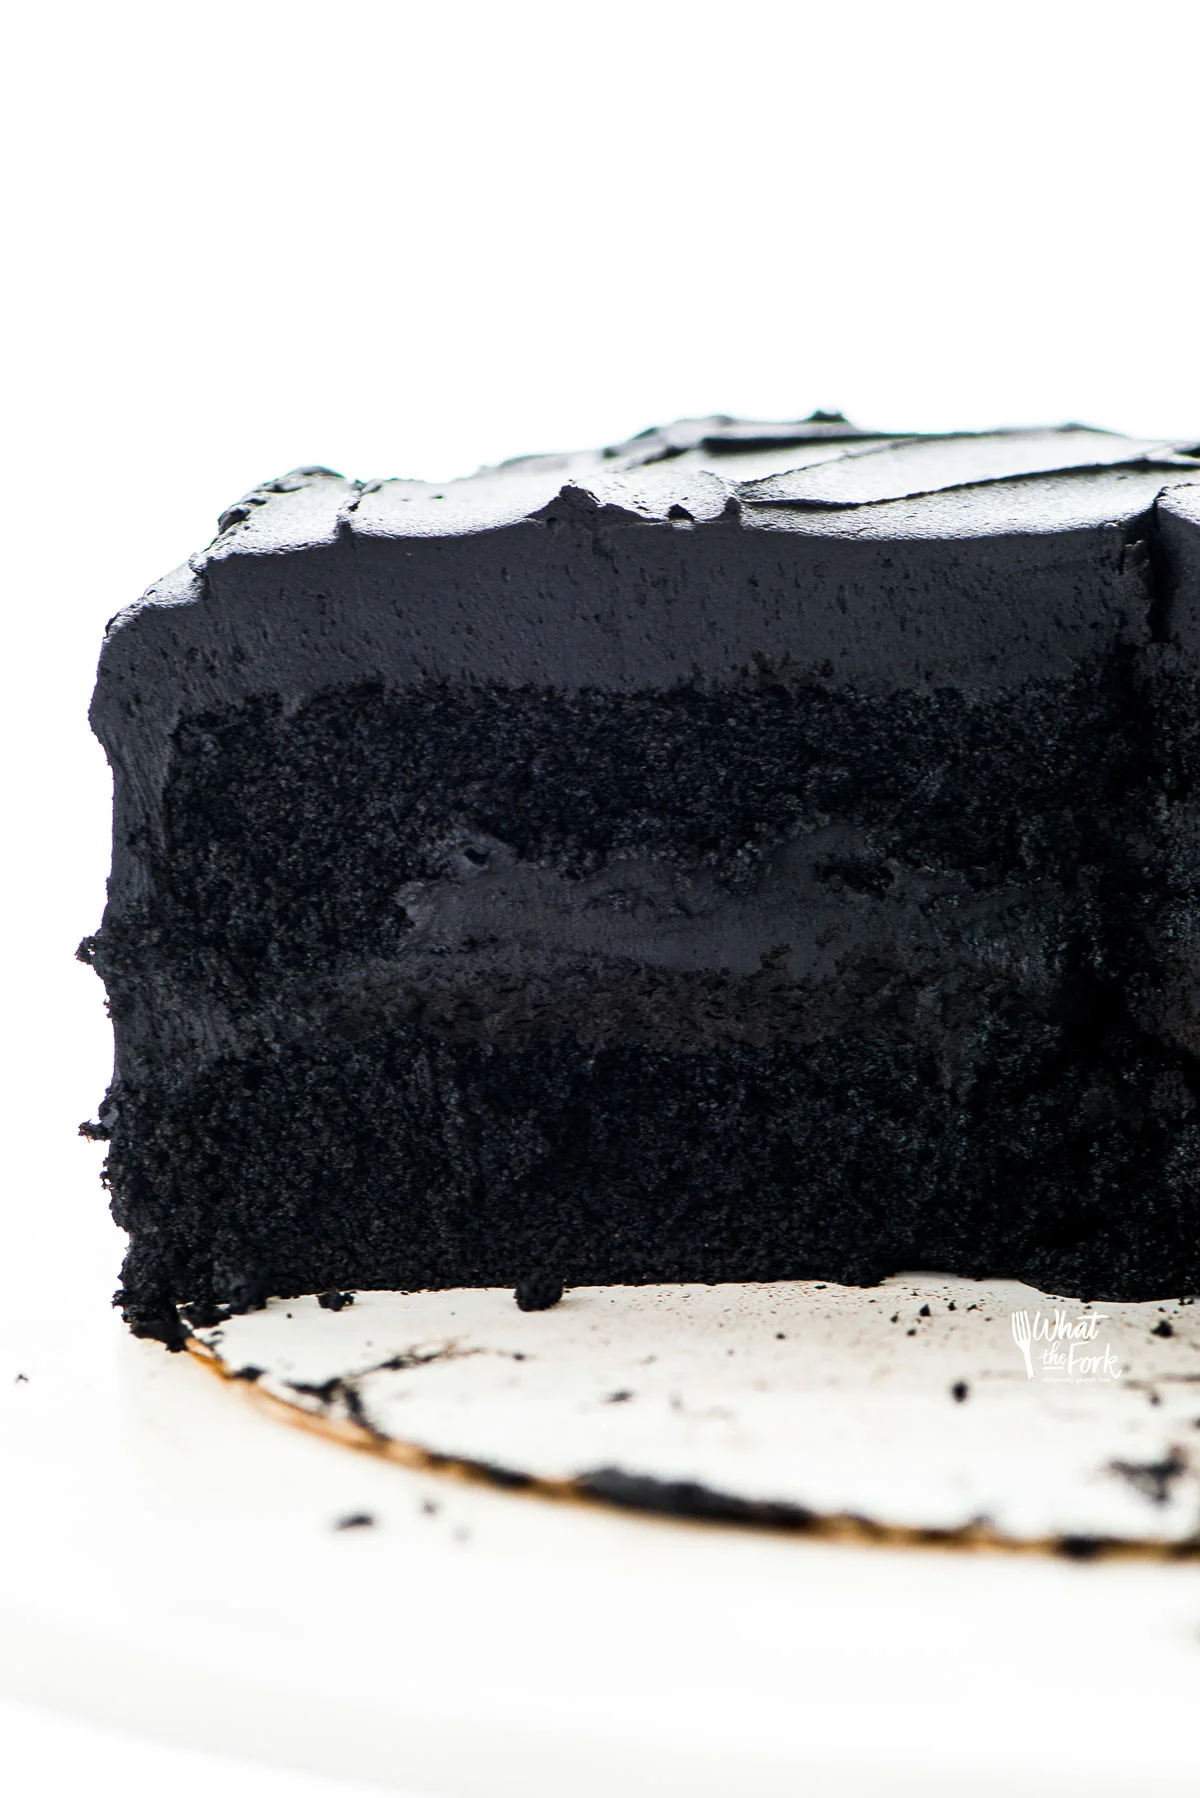 a gluten free black velvet cake that has been sliced into 